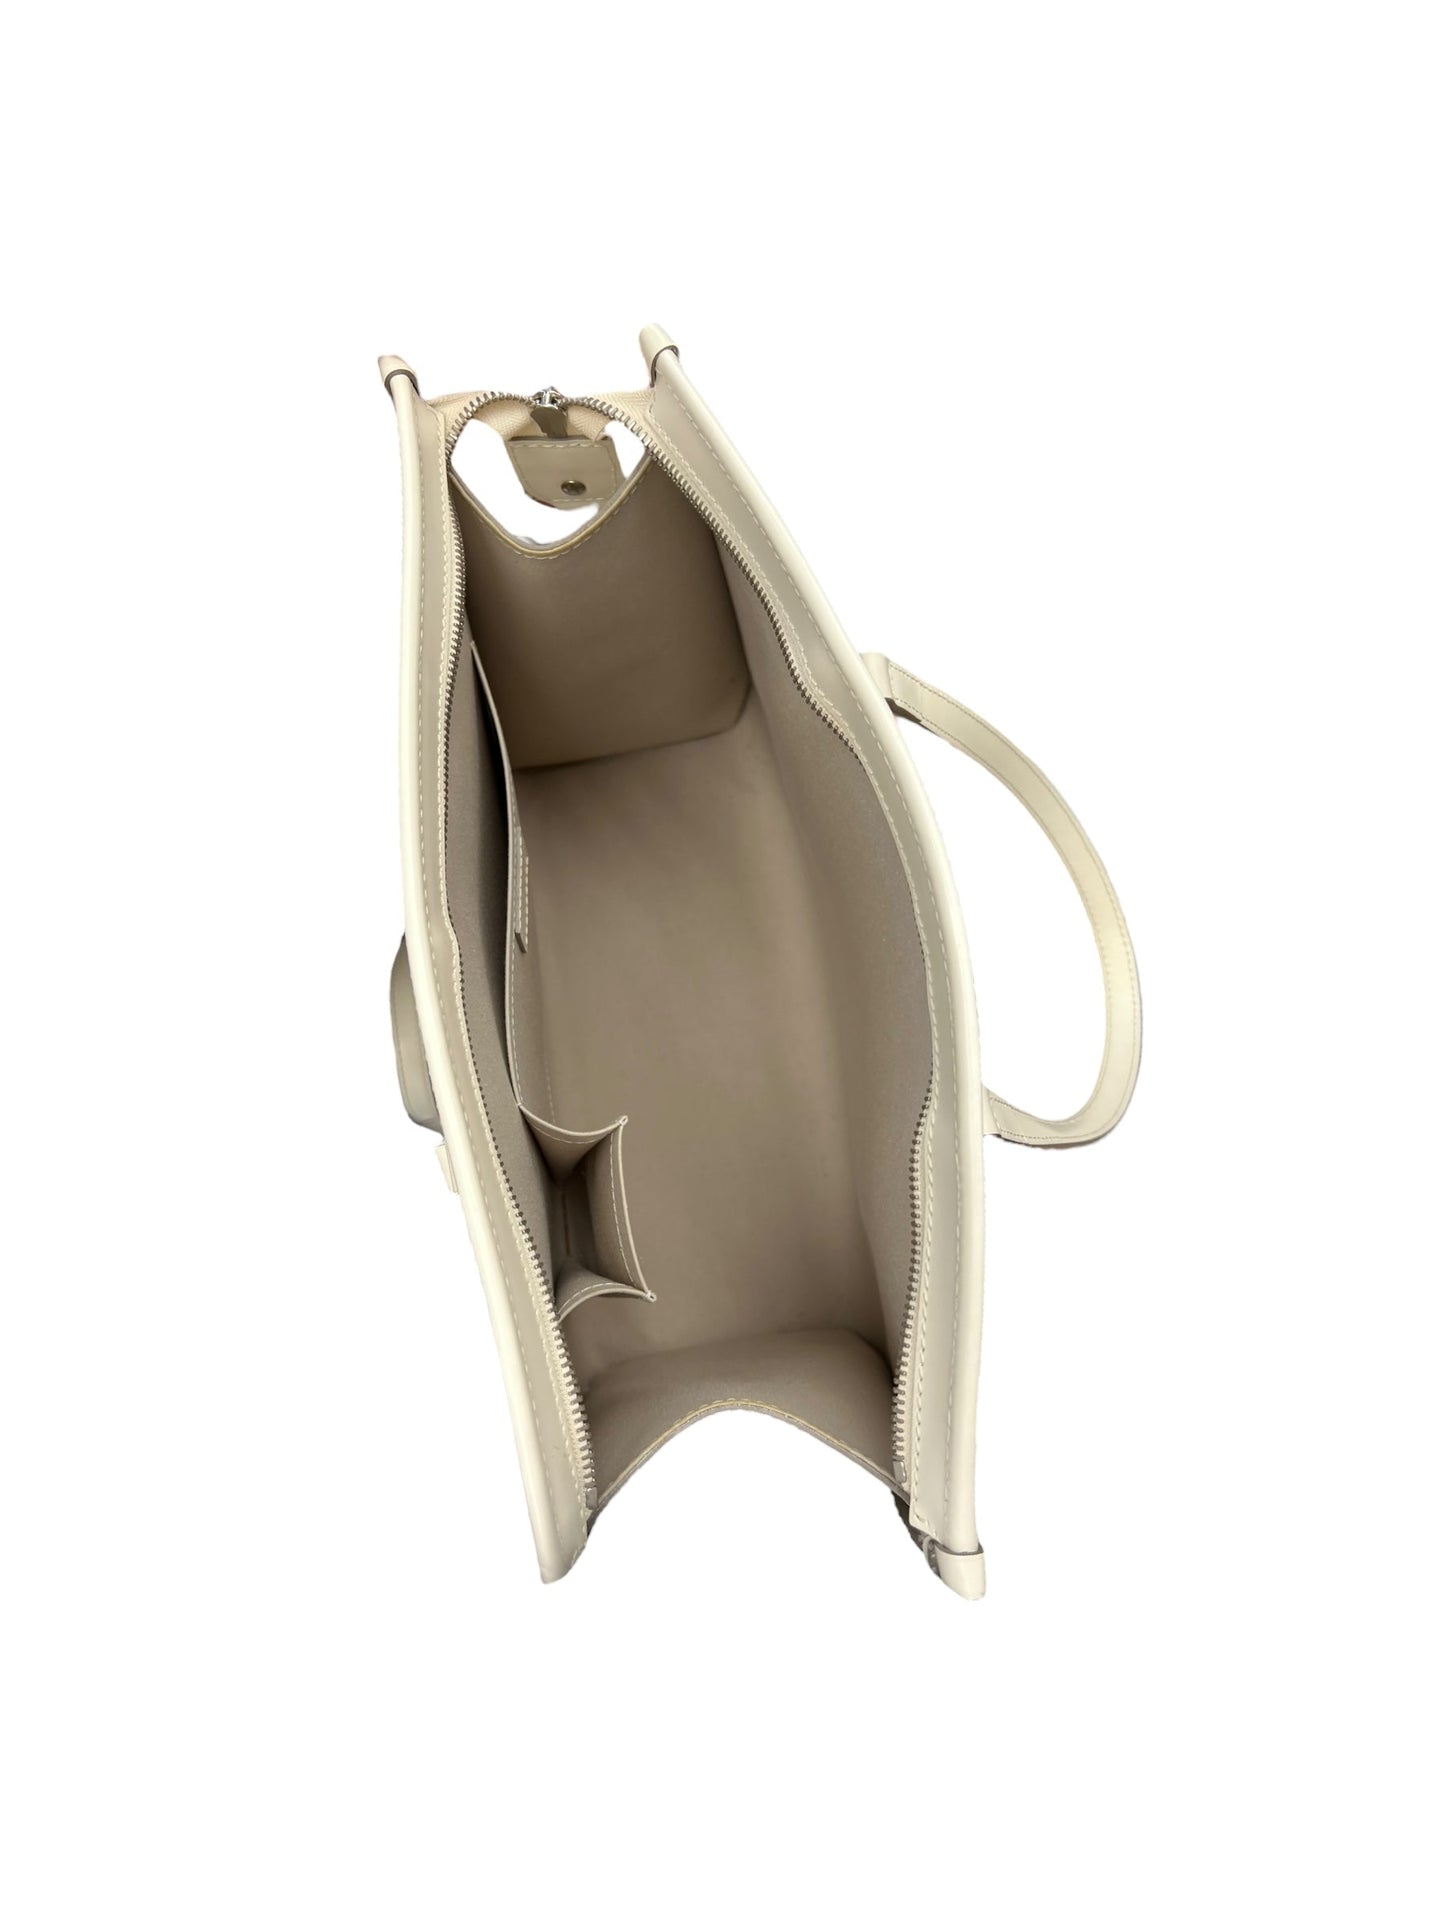 Ivory Handbag Luxury Designer Louis Vuitton, Size Large